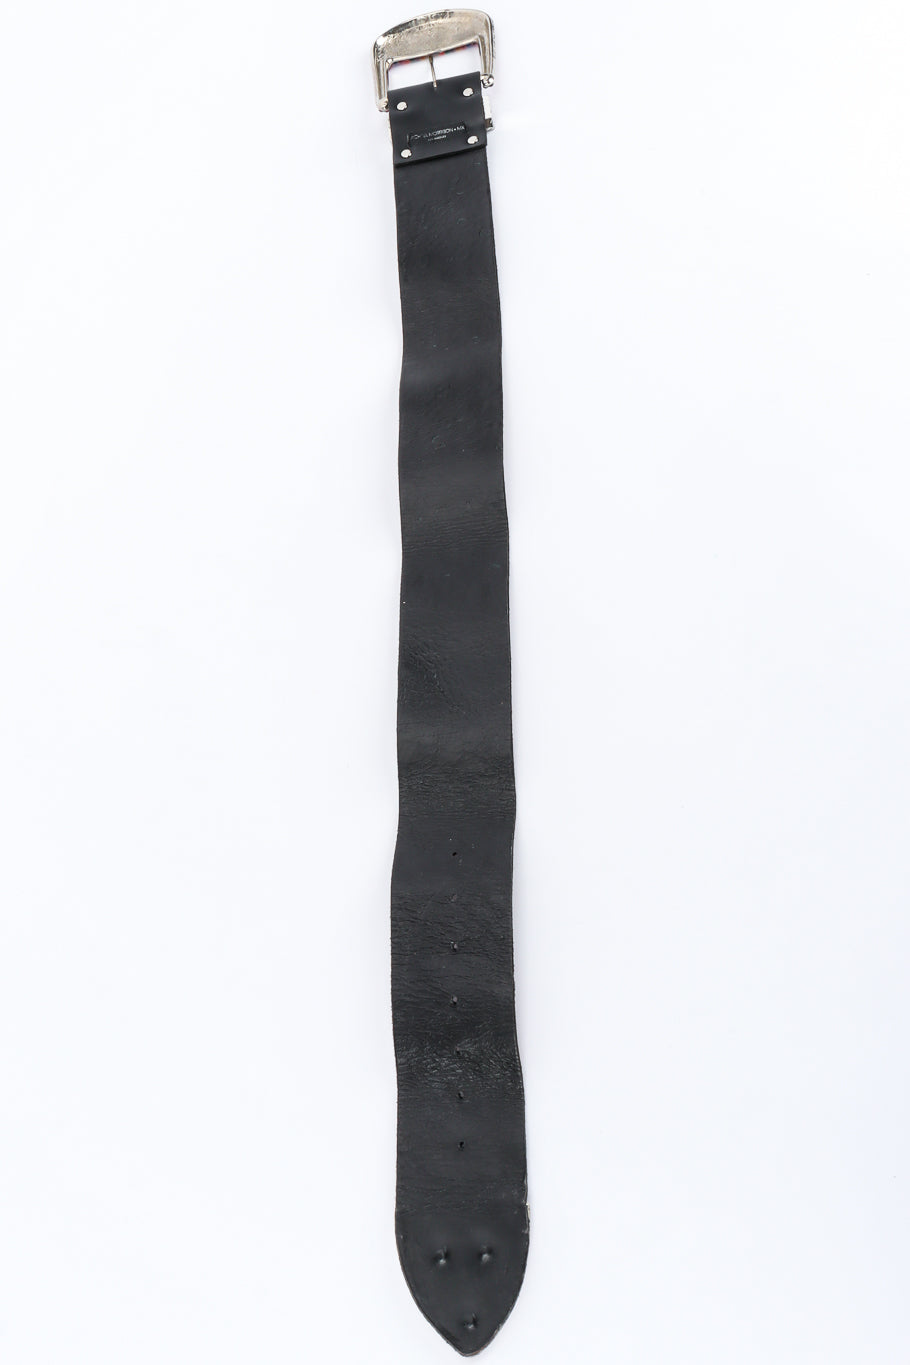 Vintage Michael Morrison MX Rainbow Crystal Studded Leather Belt back leather @ Recess LA